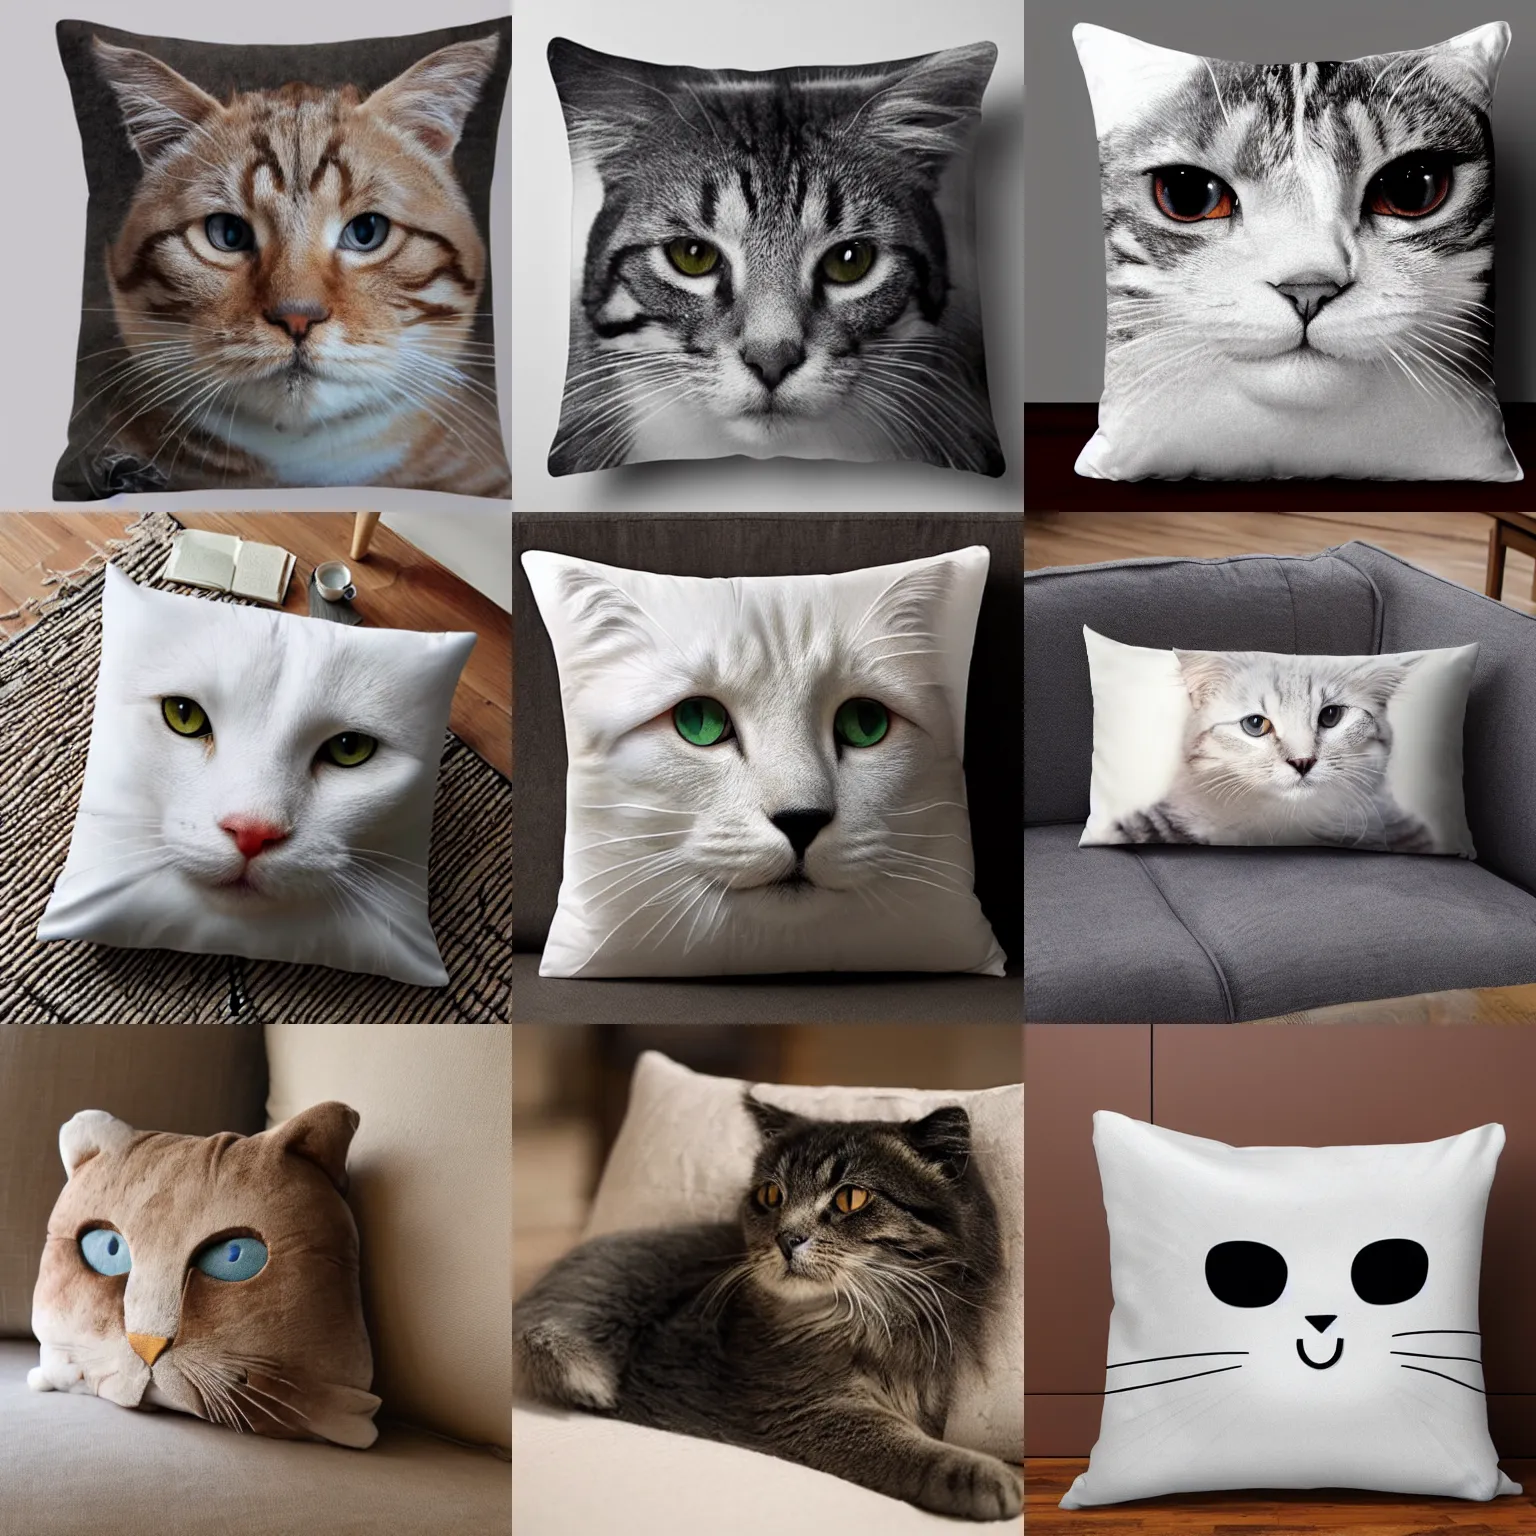 Prompt: a pillow cat, realistic